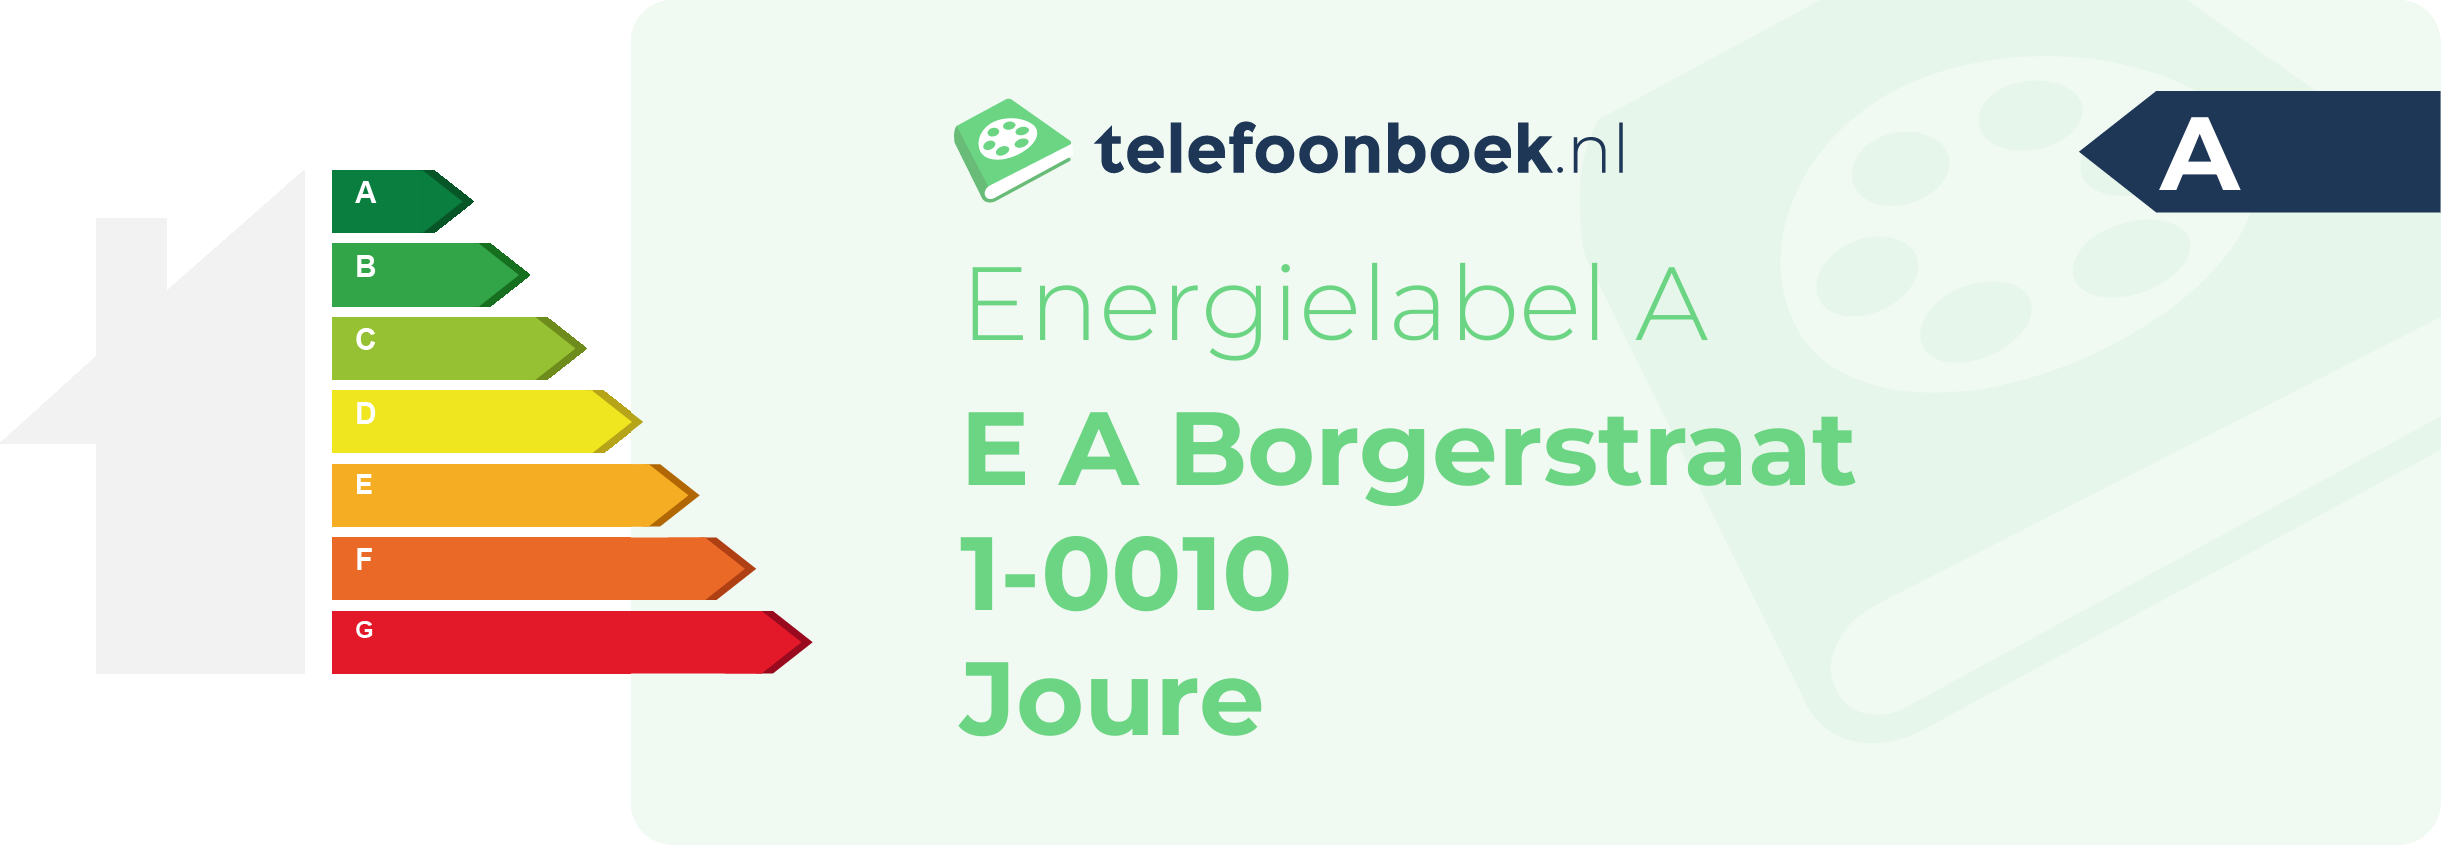 Energielabel E A Borgerstraat 1-0010 Joure